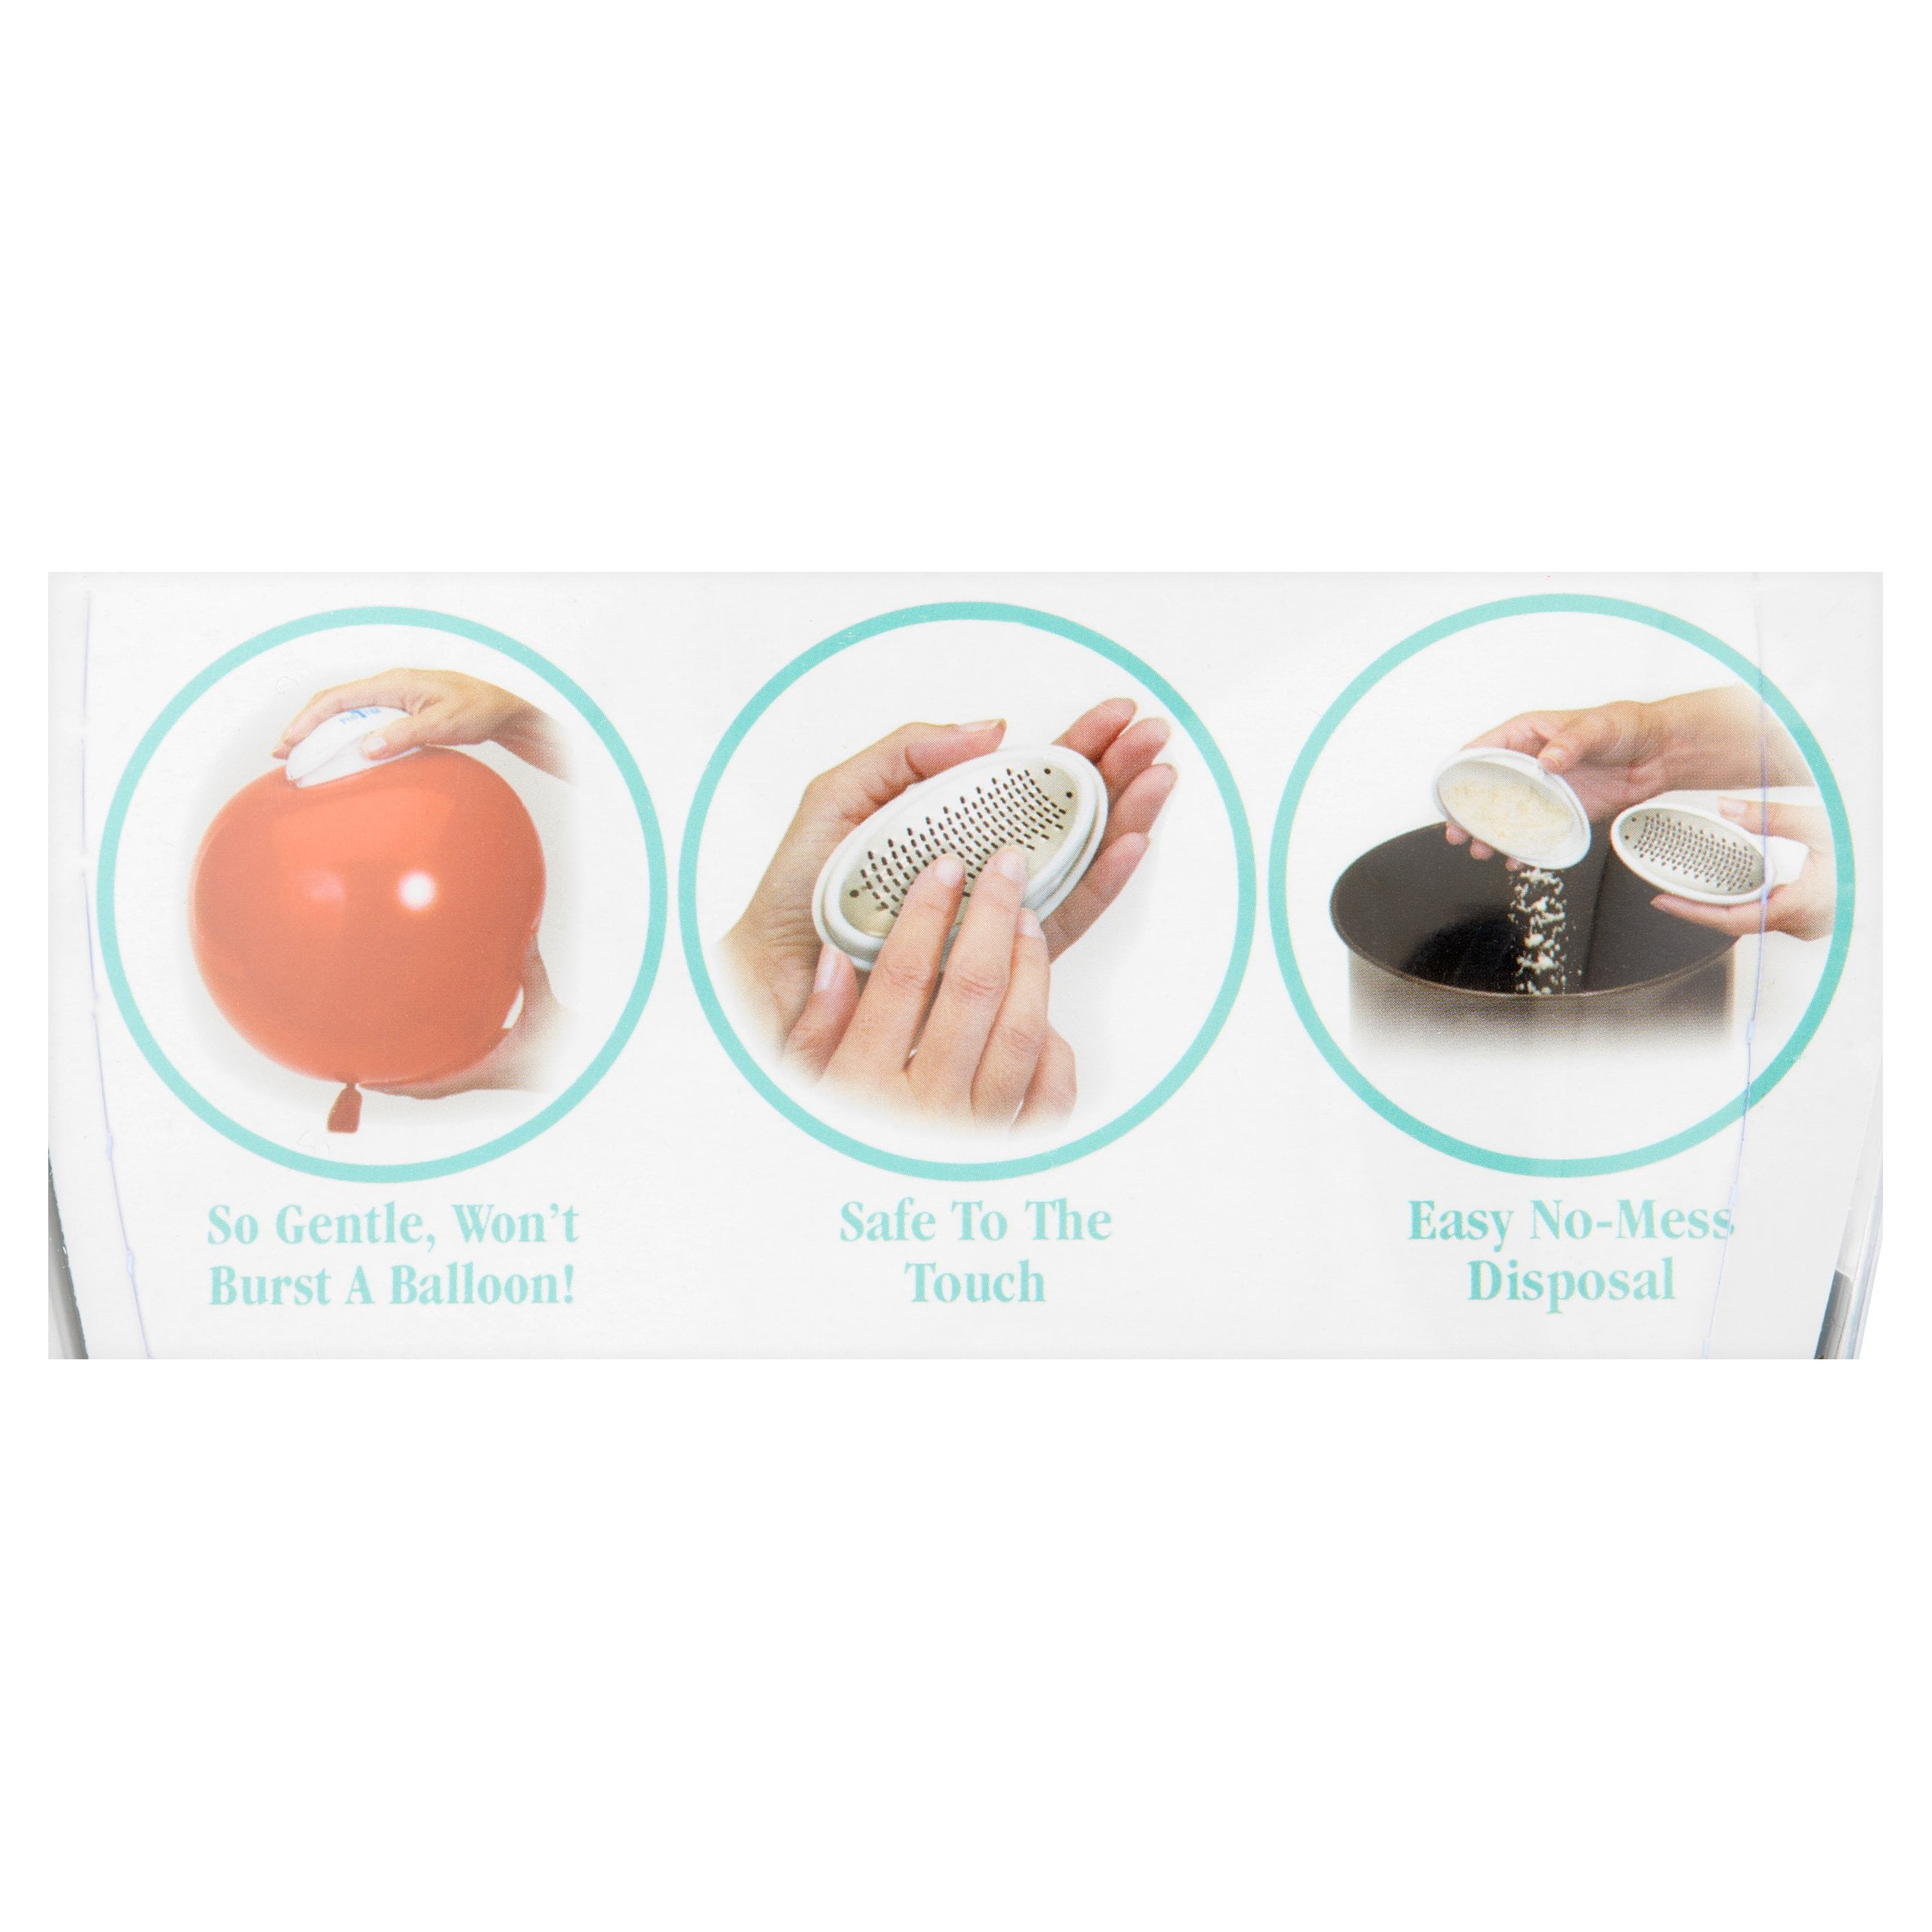 Ped Egg Professional Pedicure designed to eliminate callus & dry